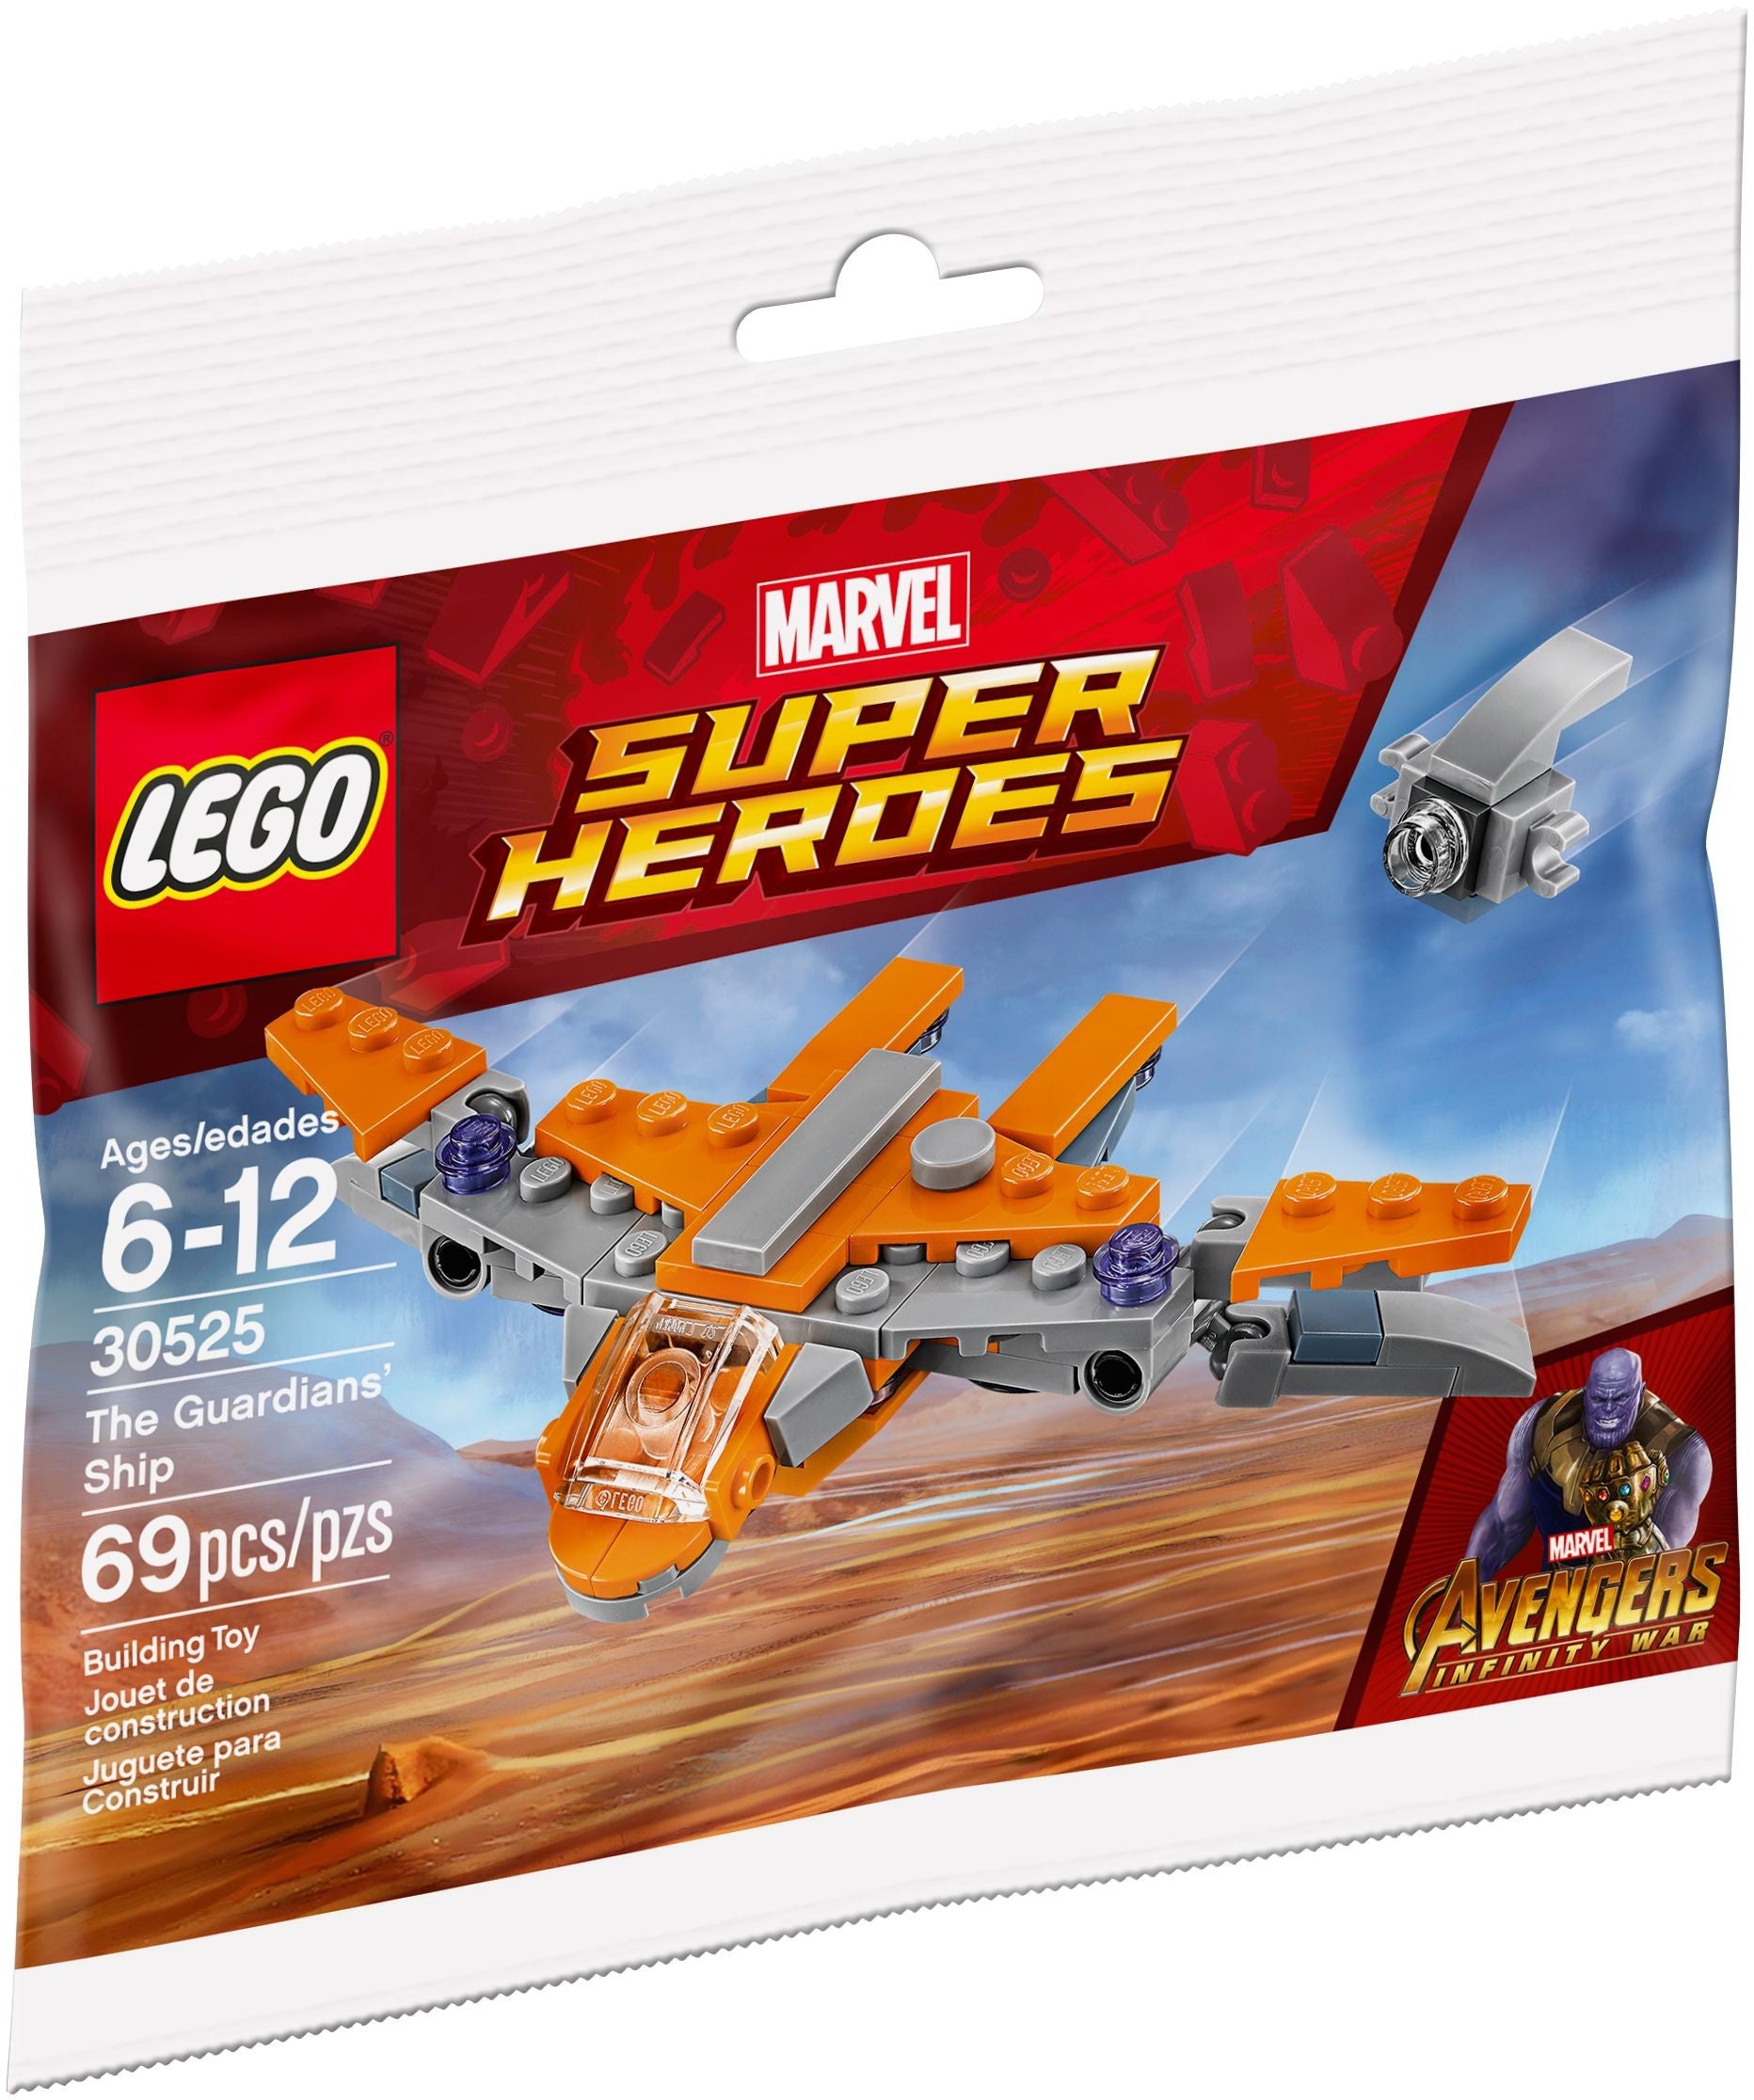 LEGO Marvel Super Heroes: Abenteuer mit den mächtigsten Helden! Getaggt 